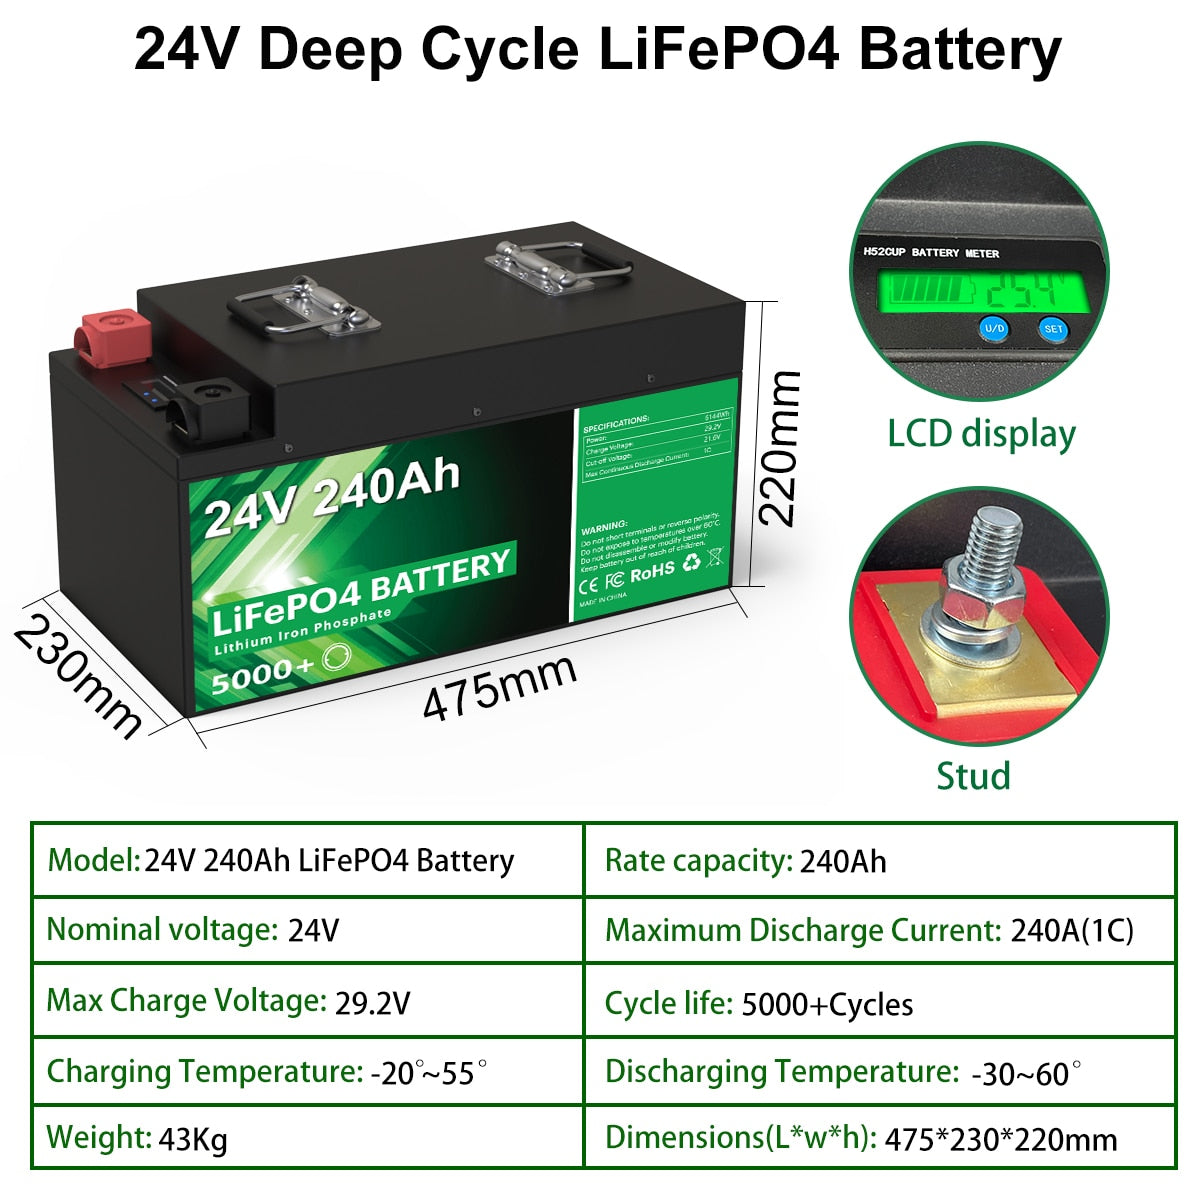 Pacco batteria LiFePO4 24V 300Ah 200Ah 100Ah - 6000 cicli 25,6V 7680Wh 8S 200A BMS RV Golf Cart Batteria al litio ricaricabile Nessuna imposta